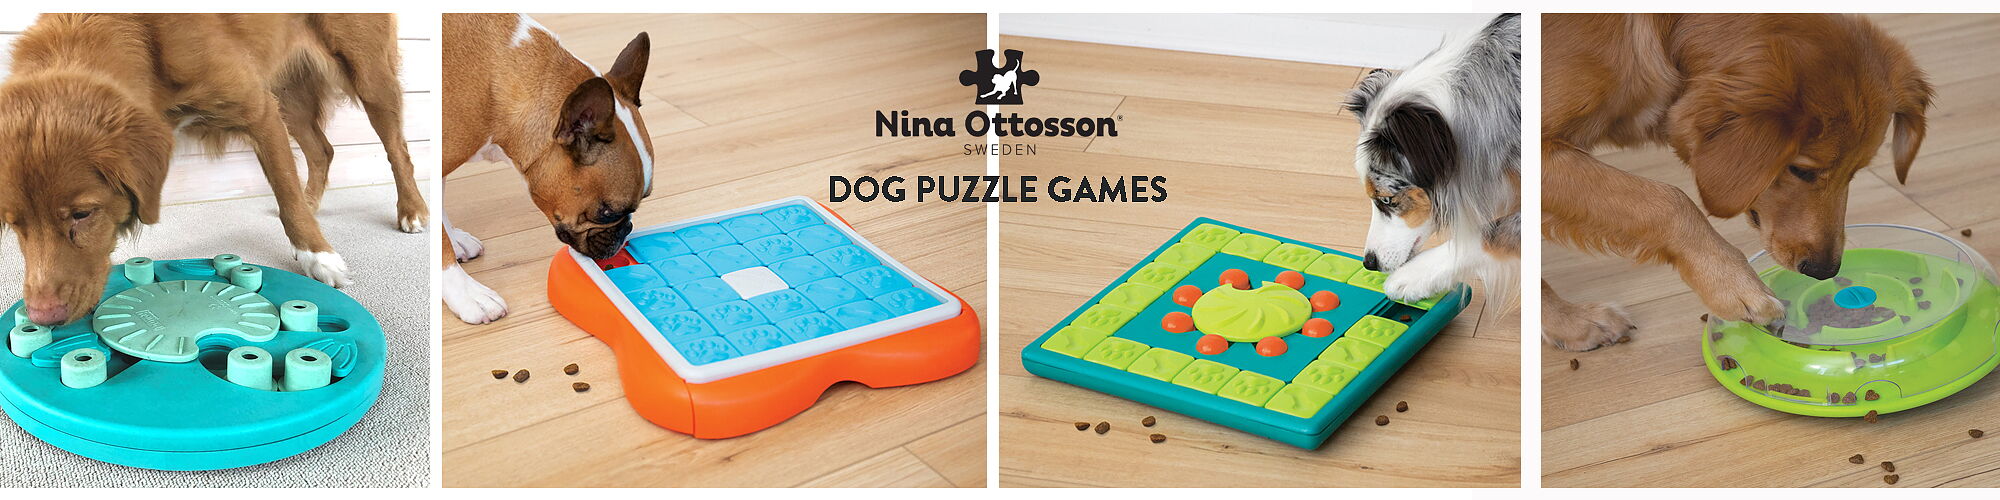 Nina Ottosson Dog Puzzle Games Toys